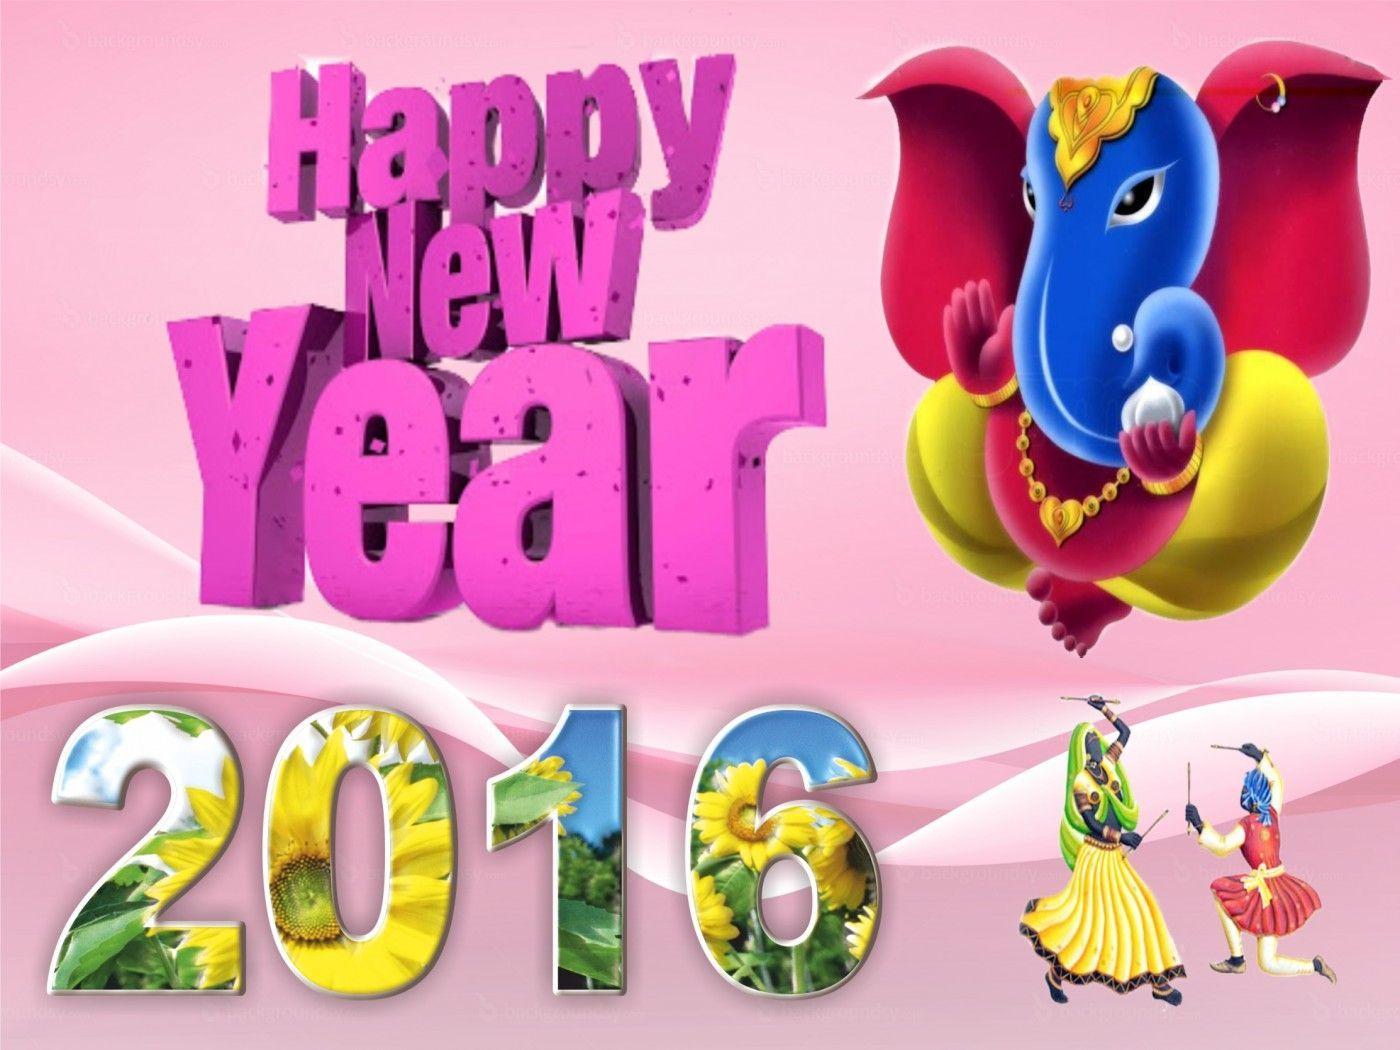 Happy New Year 2016 Best Whatsapp Image. Happy New Year 2016